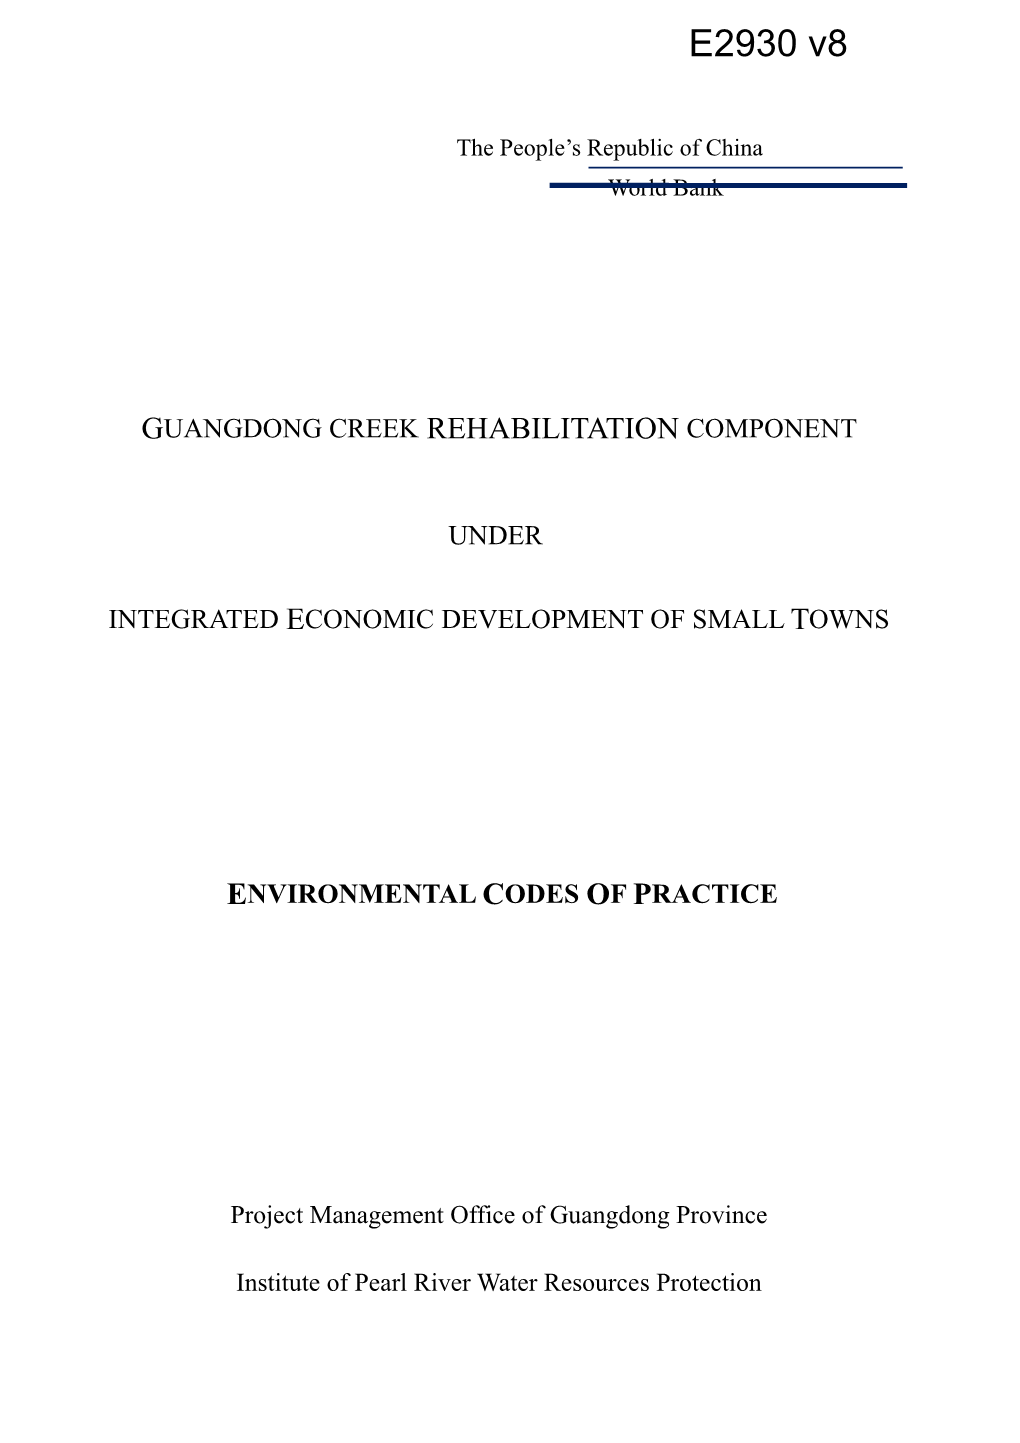 Guangdong Creekrehabilitation Component Under